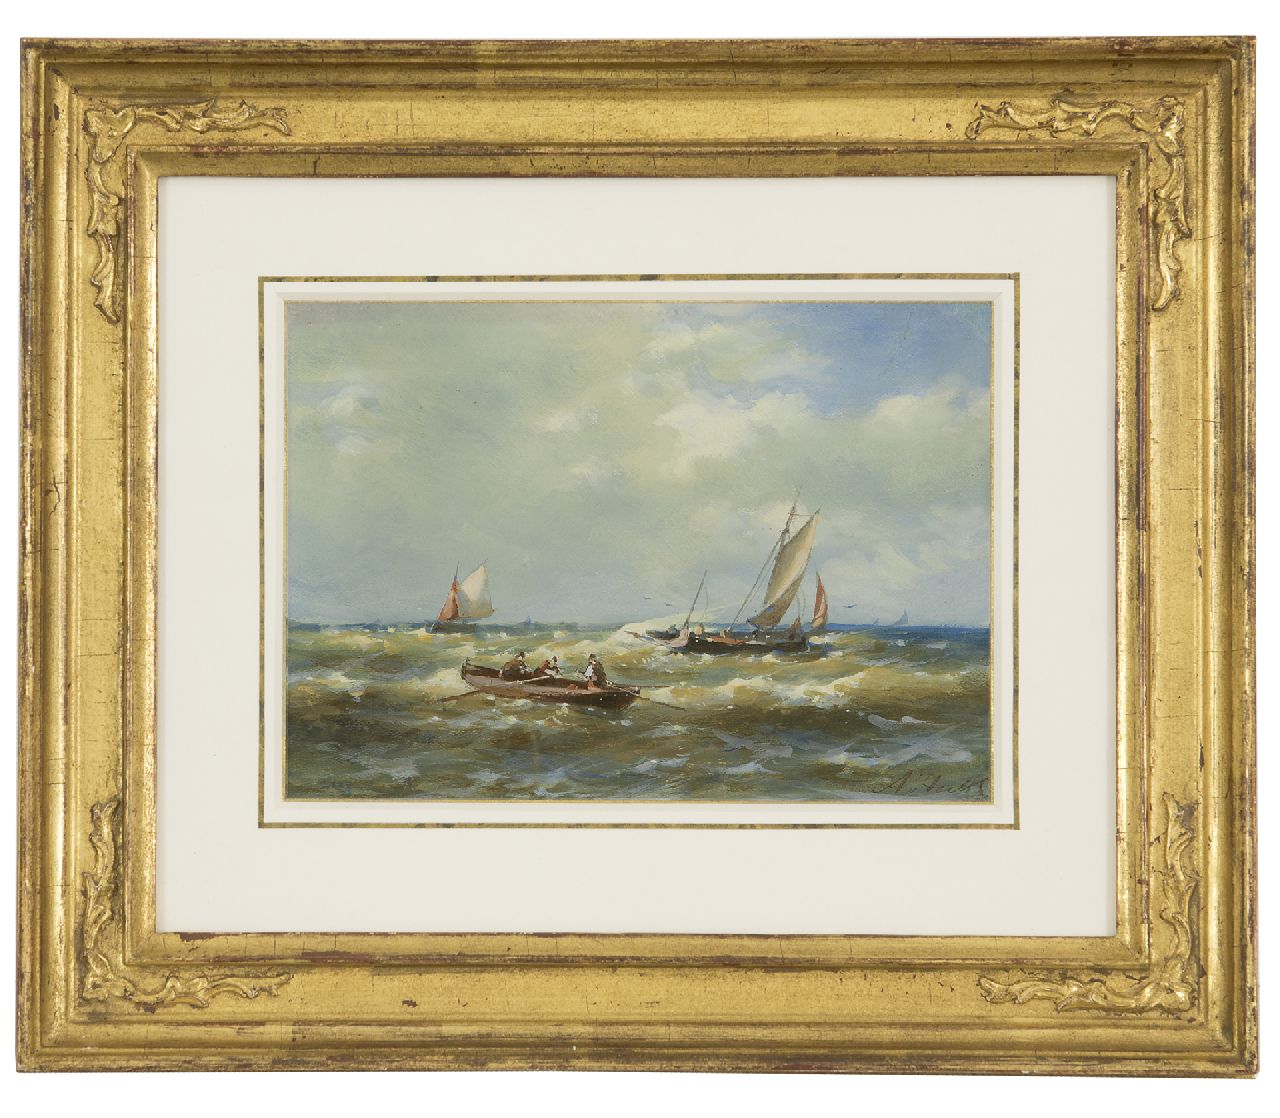 Hulk A.  | Abraham Hulk, Ships sailing at sea, watercolour and gouache on paper 11.5 x 16.9 cm, signed l.r.